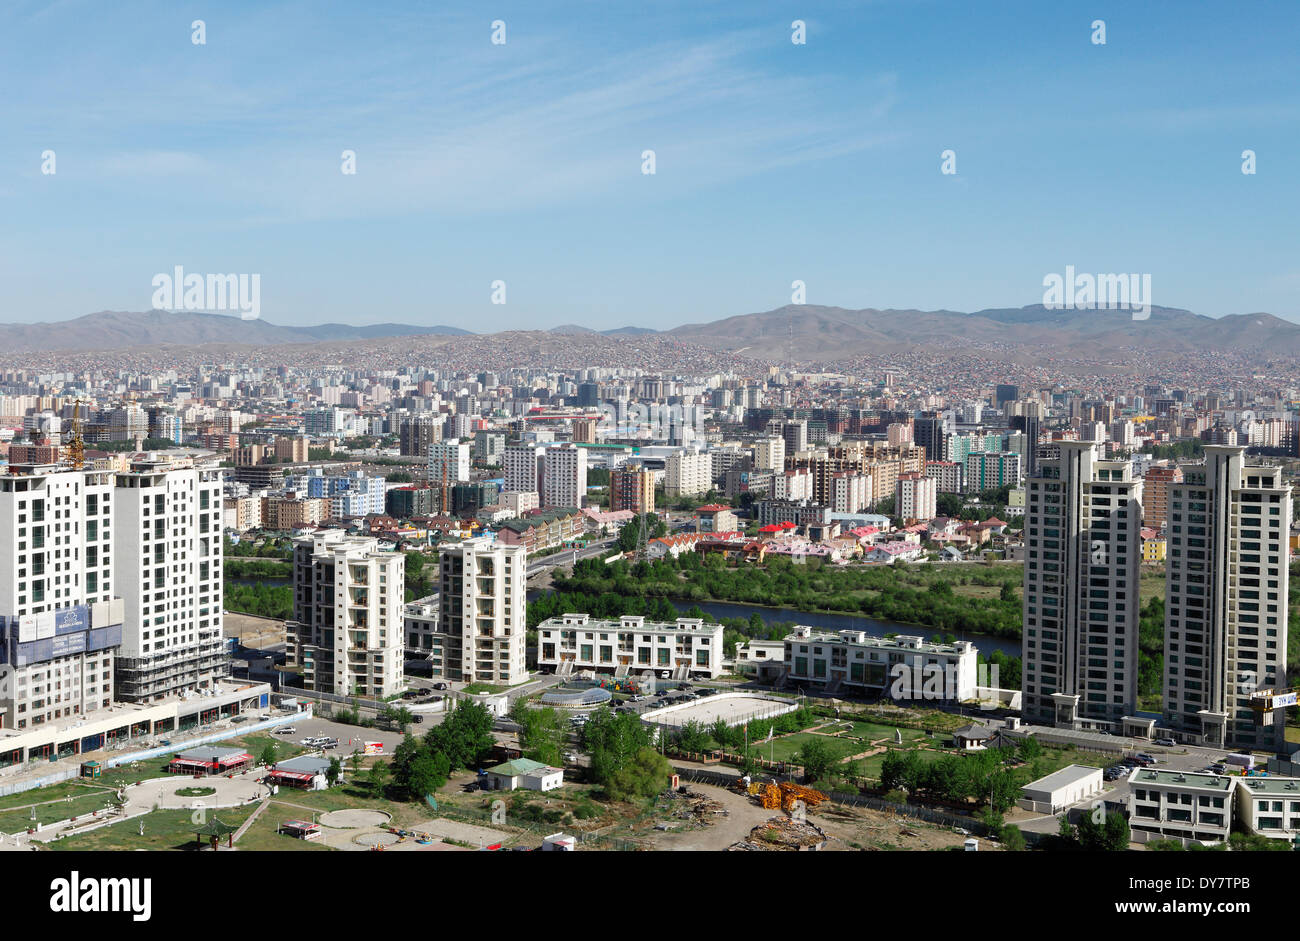 Cityscape of Ulan Bator or Ulaanbaatar, Mongolia Stock Photo